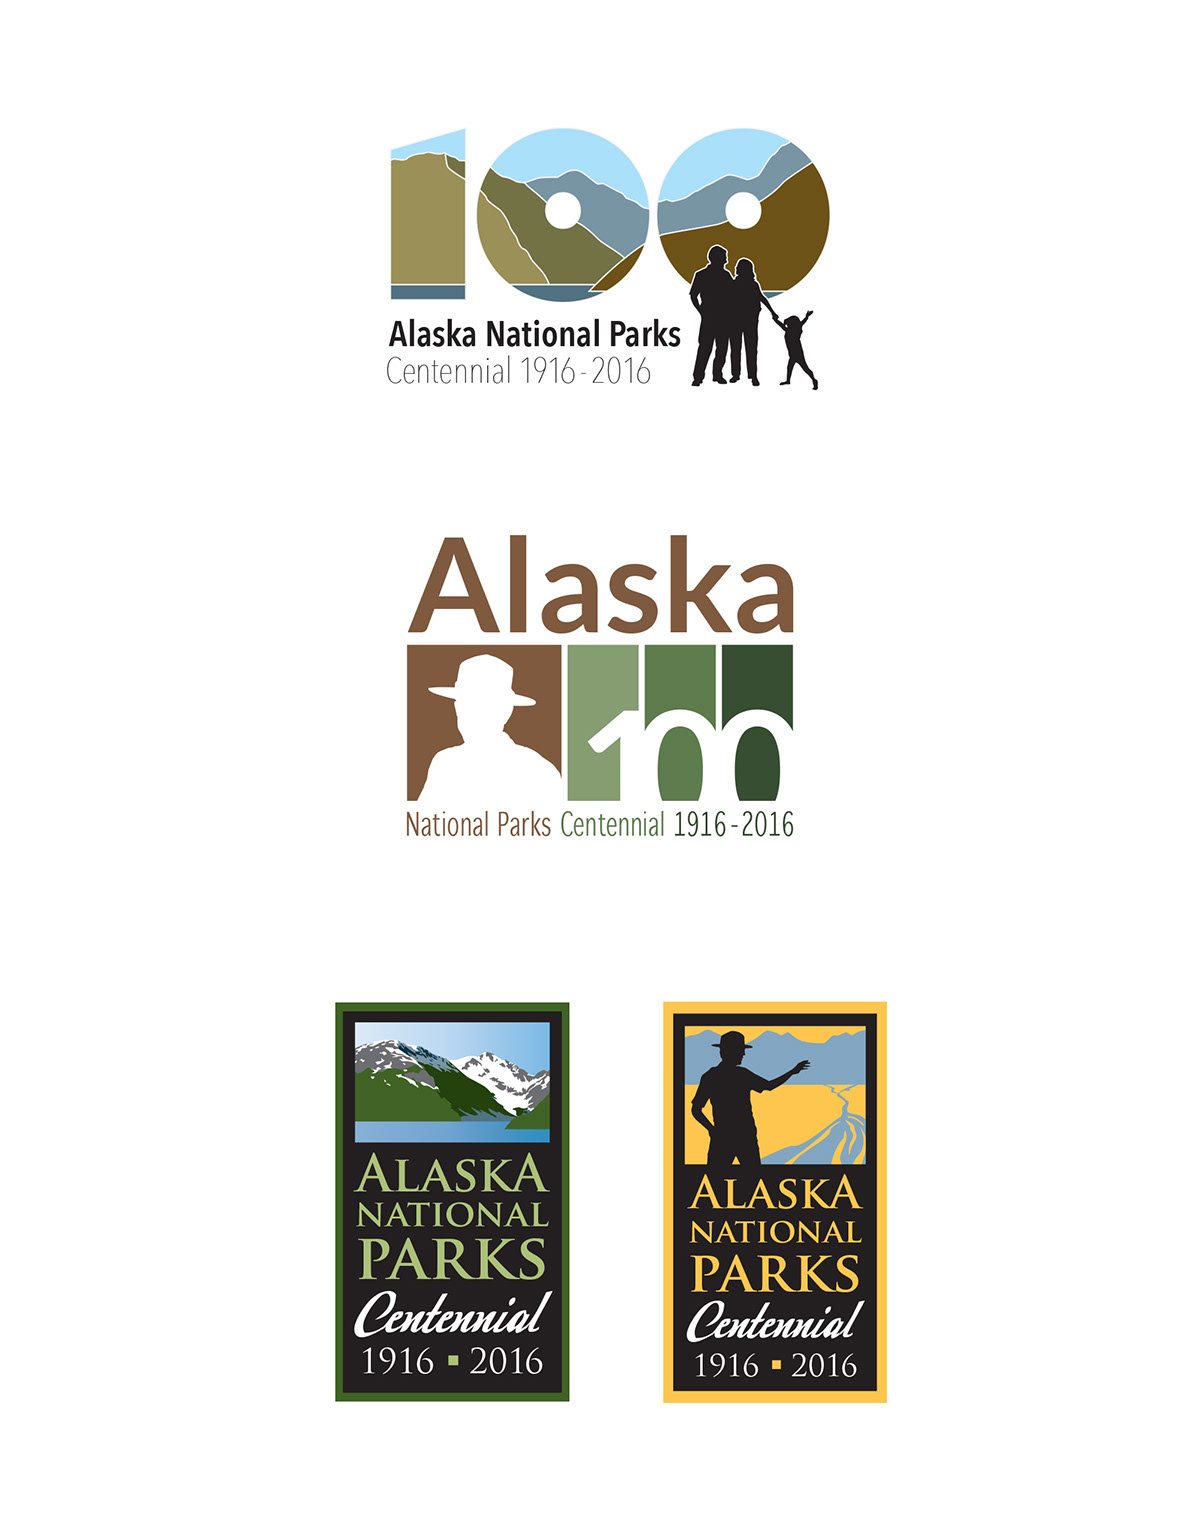 Alaska alaska national parks kenai Kodiak denali National Park Service